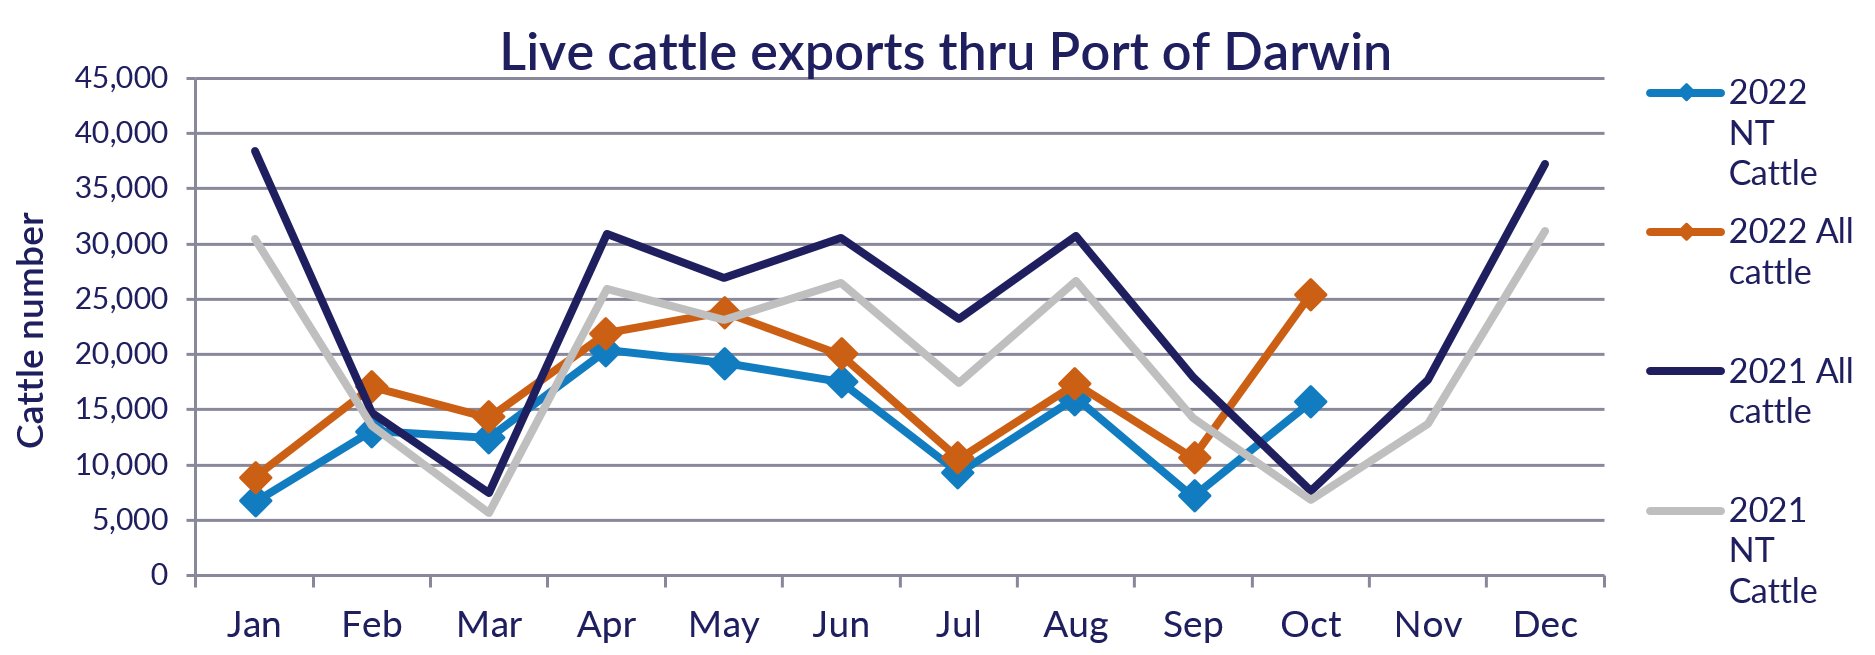 Live cattle exports thru Port of Darwin